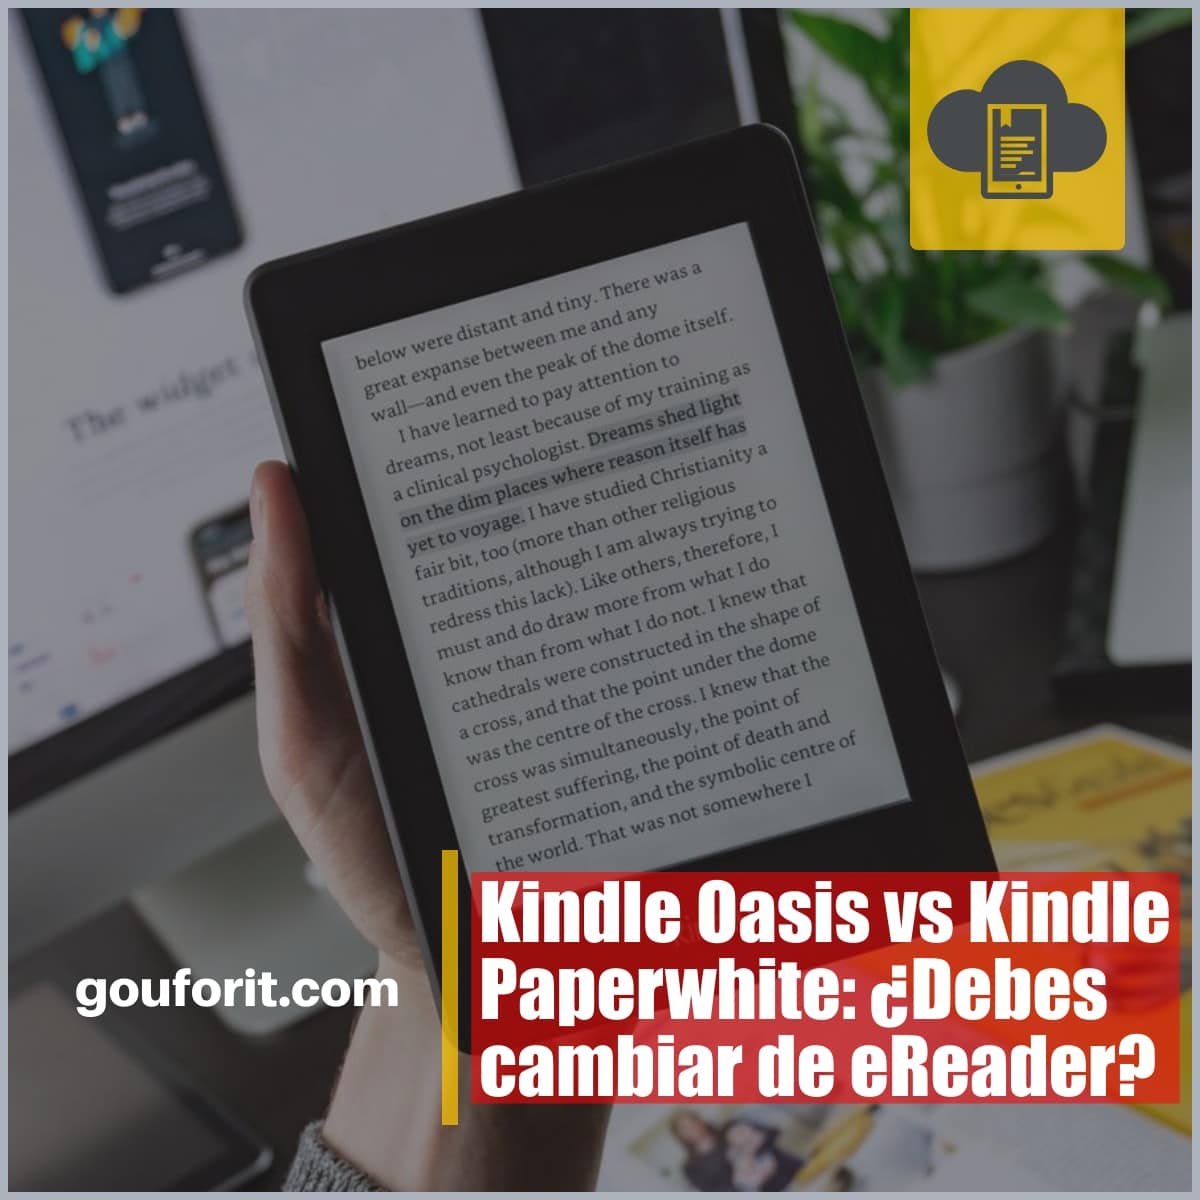 Kindle Oasis vs Kindle Paperwhite: ¿Debes cambiar de eReader?